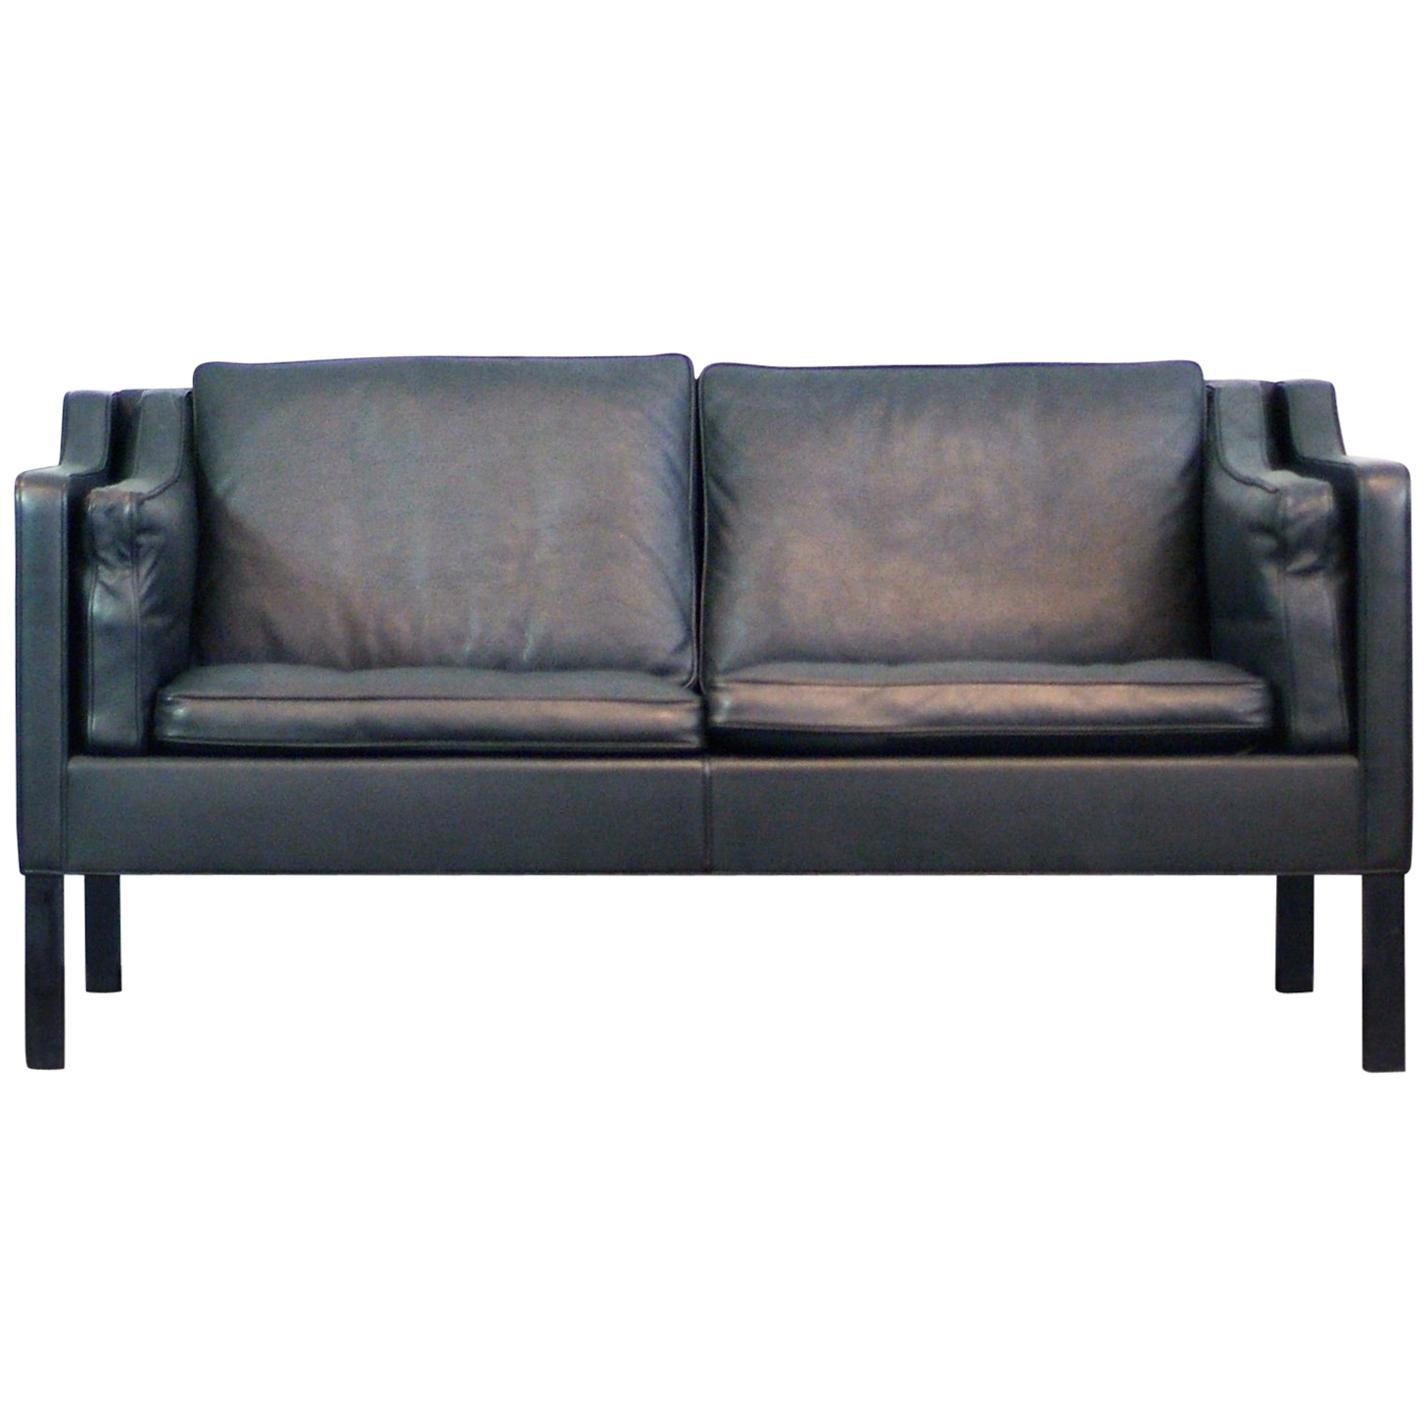 Børge Mogensen 2-Seat Sofa Mod. 2212 Fredericia Denmark Dark Grey Leather